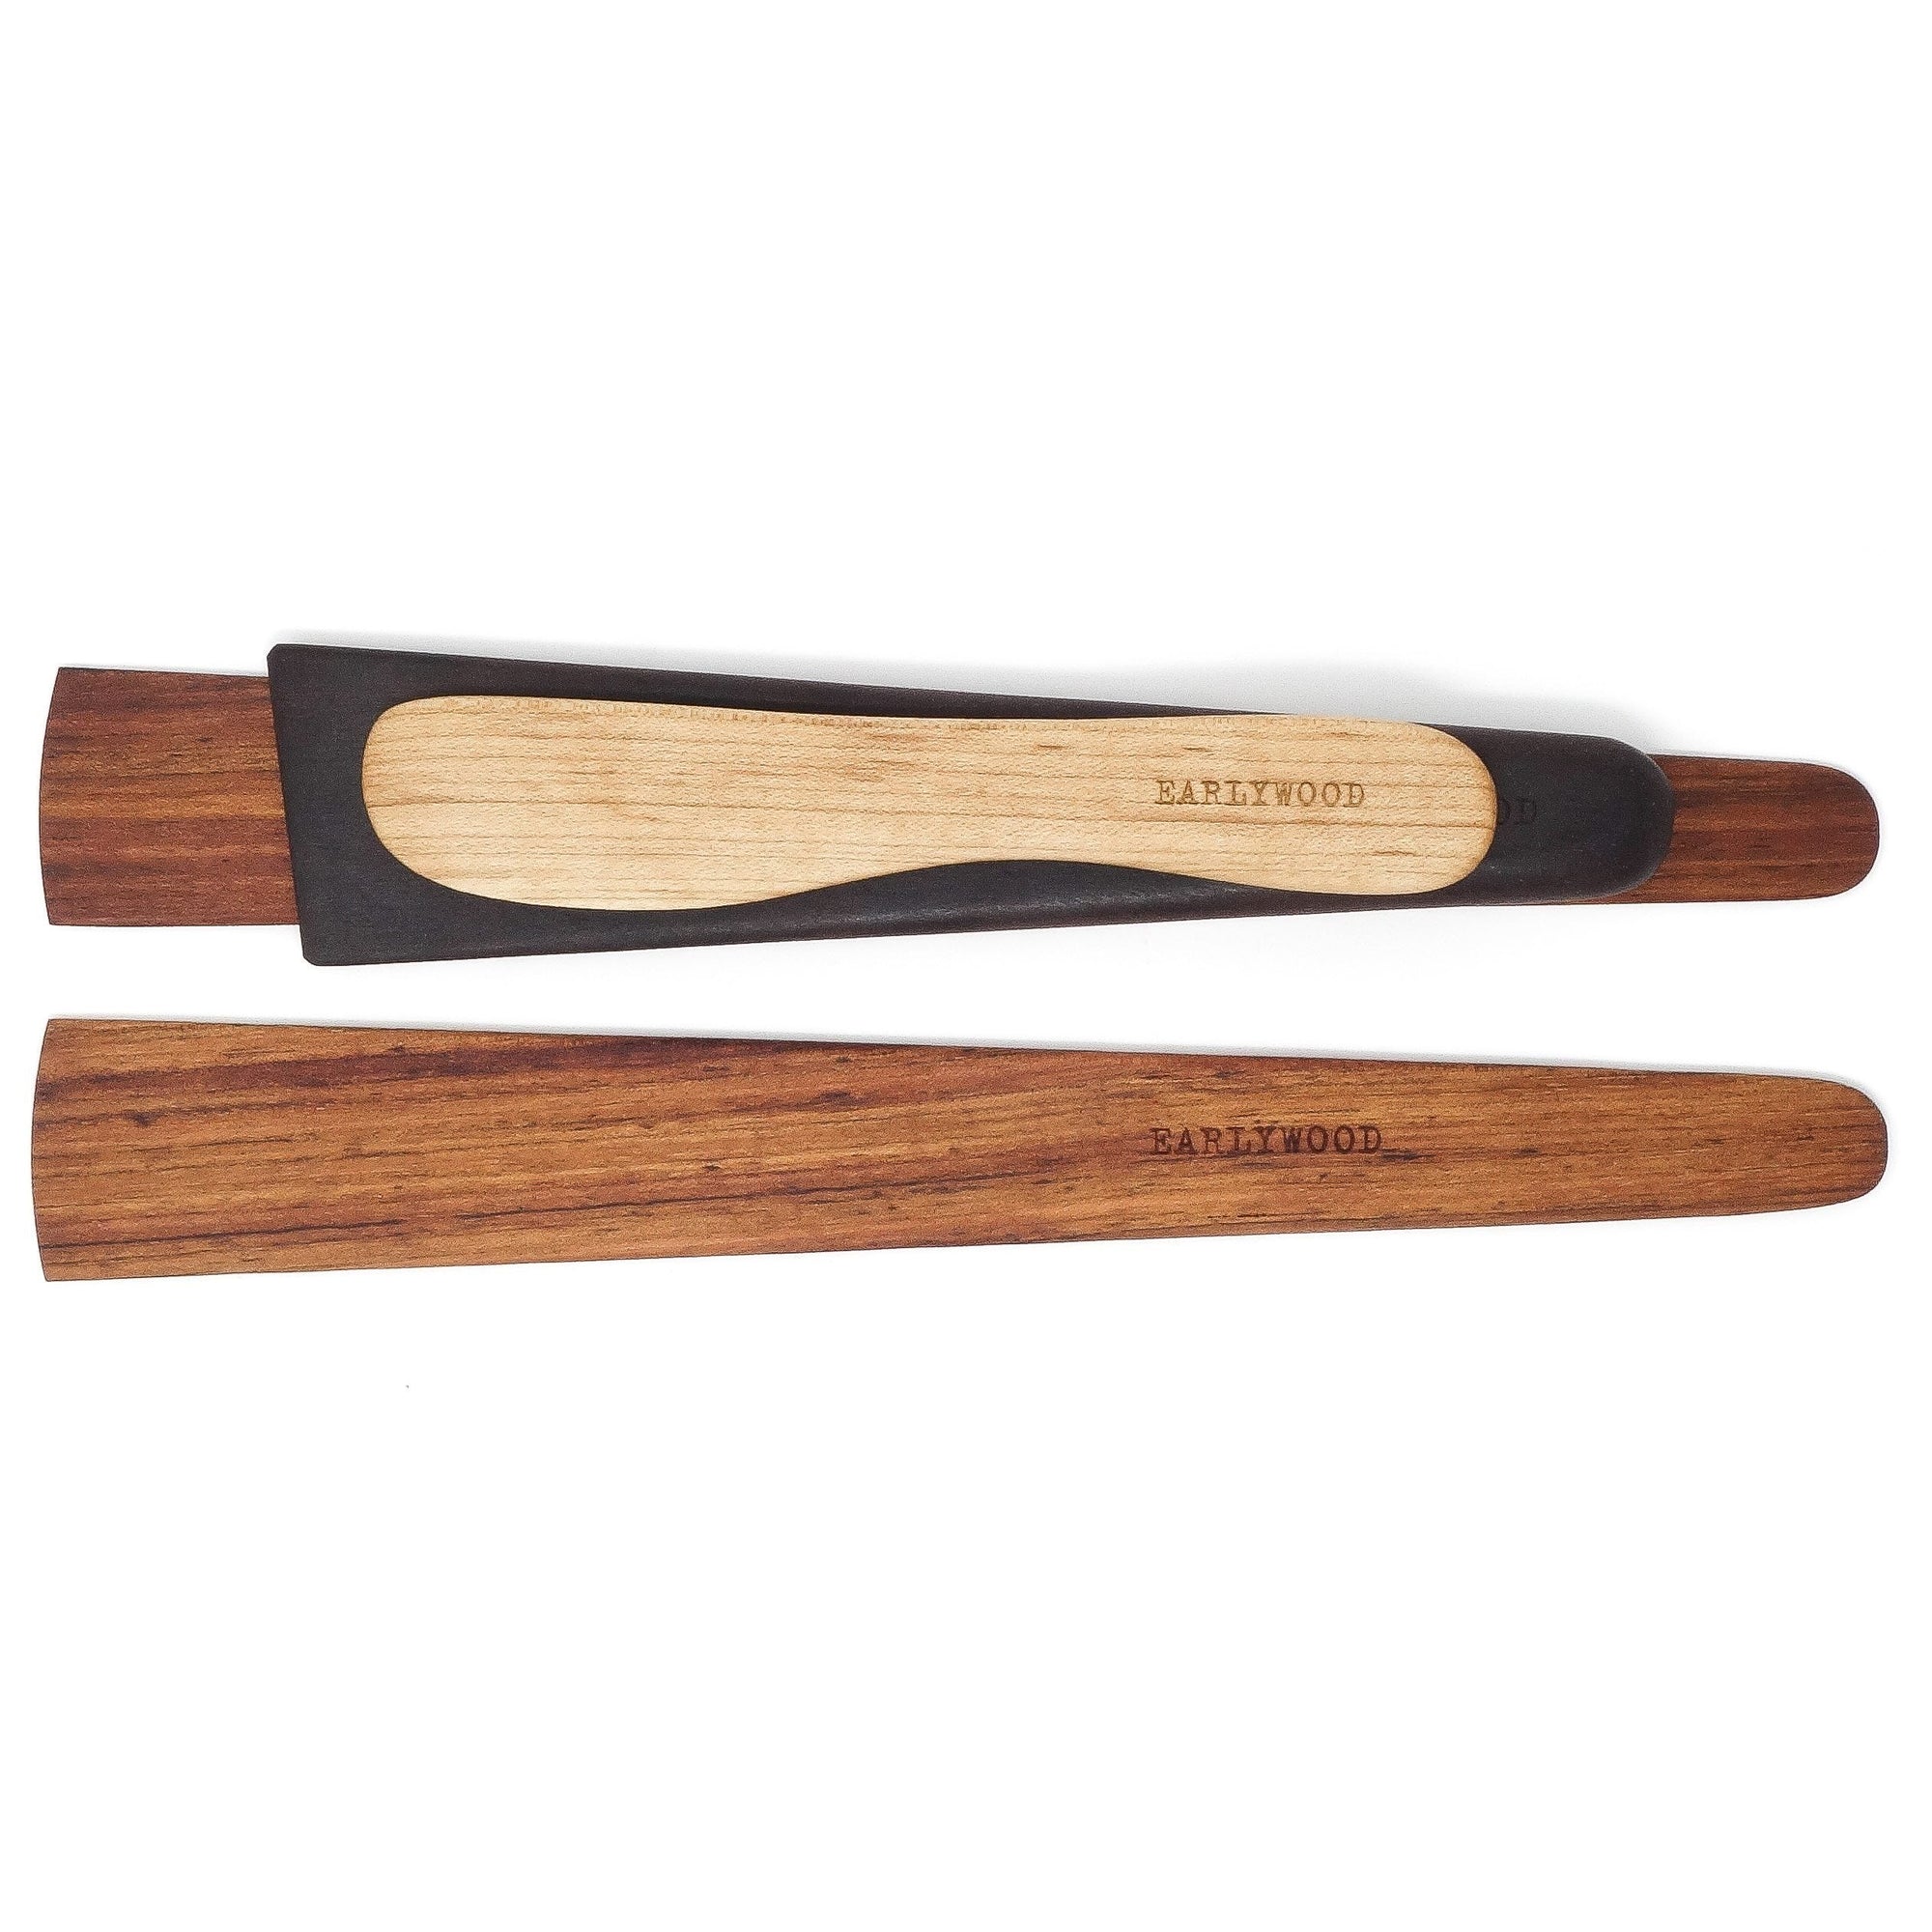 Earlywood essentials 4-piece wood spatula set - jatoba ebony maple